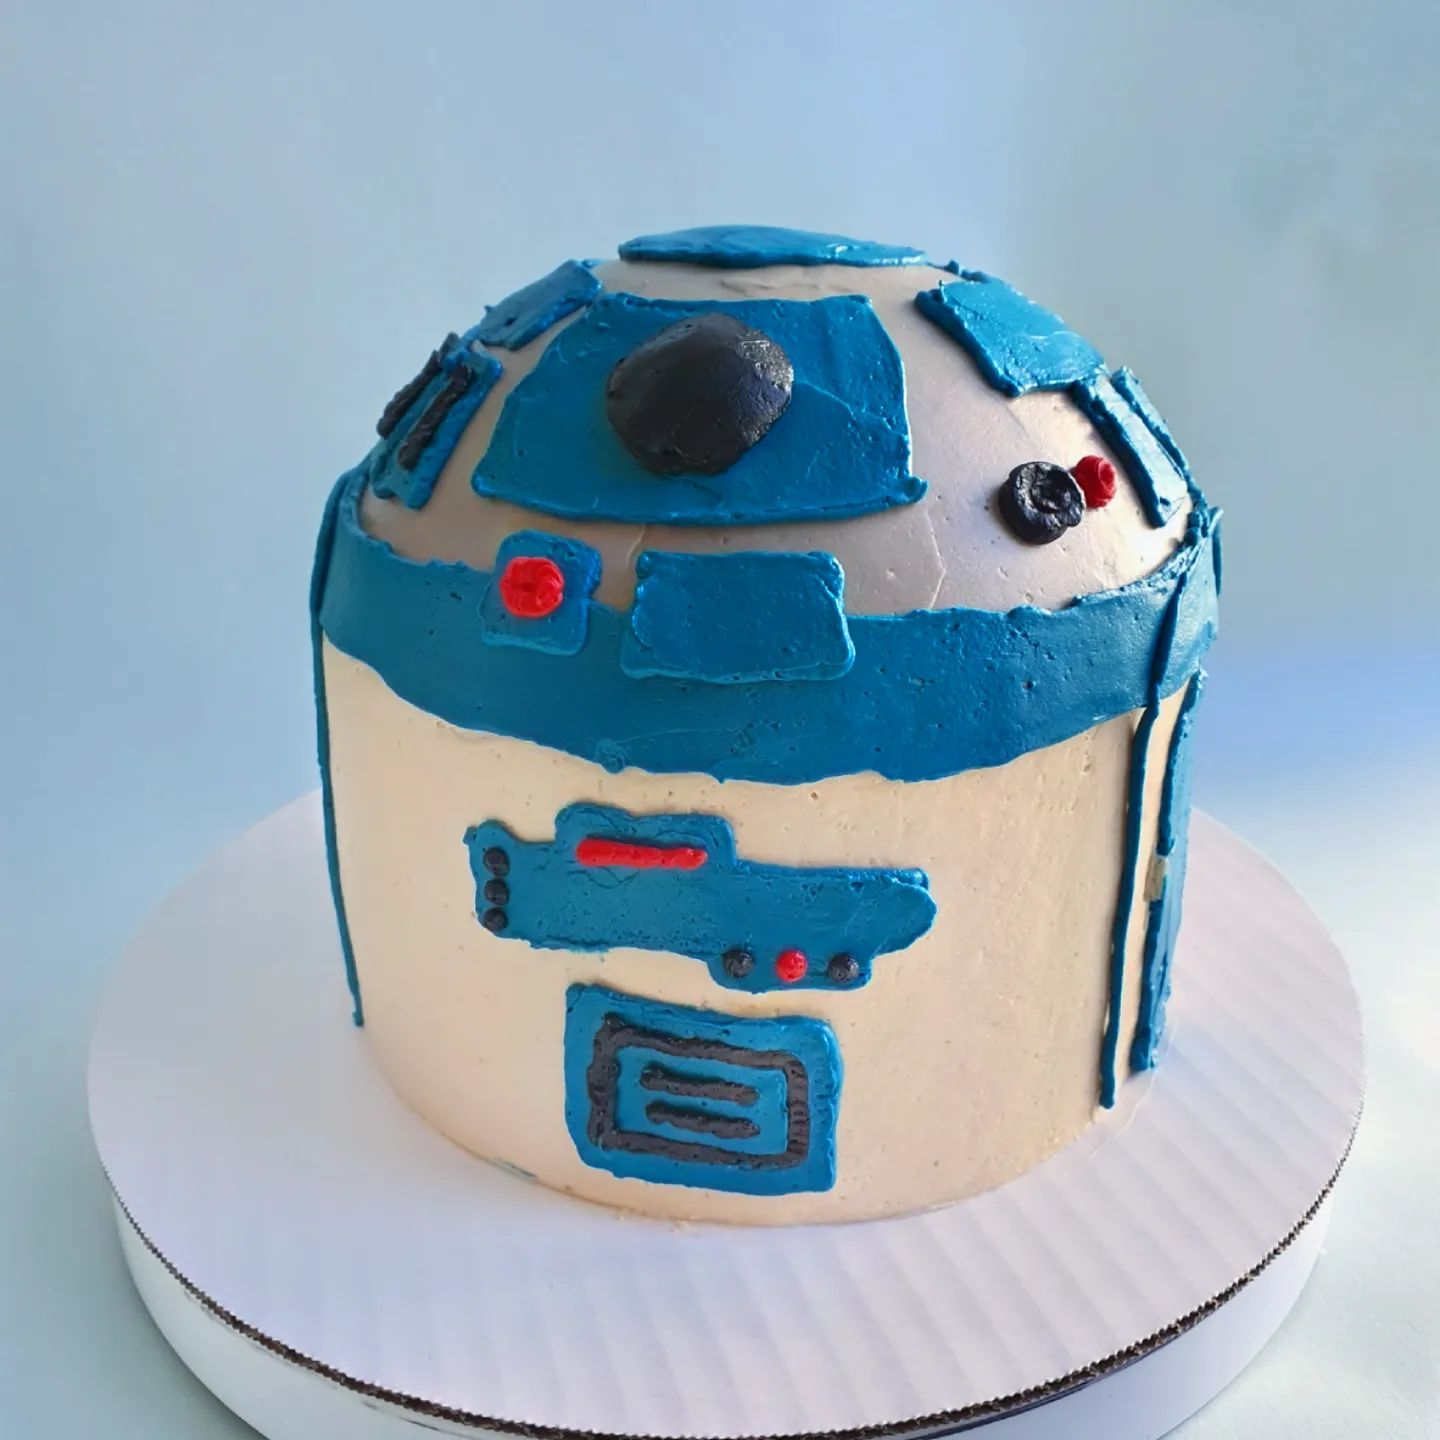 Easy Star Wars Cake Ideas (12+ Decorating Ideas) - Brain Power Family